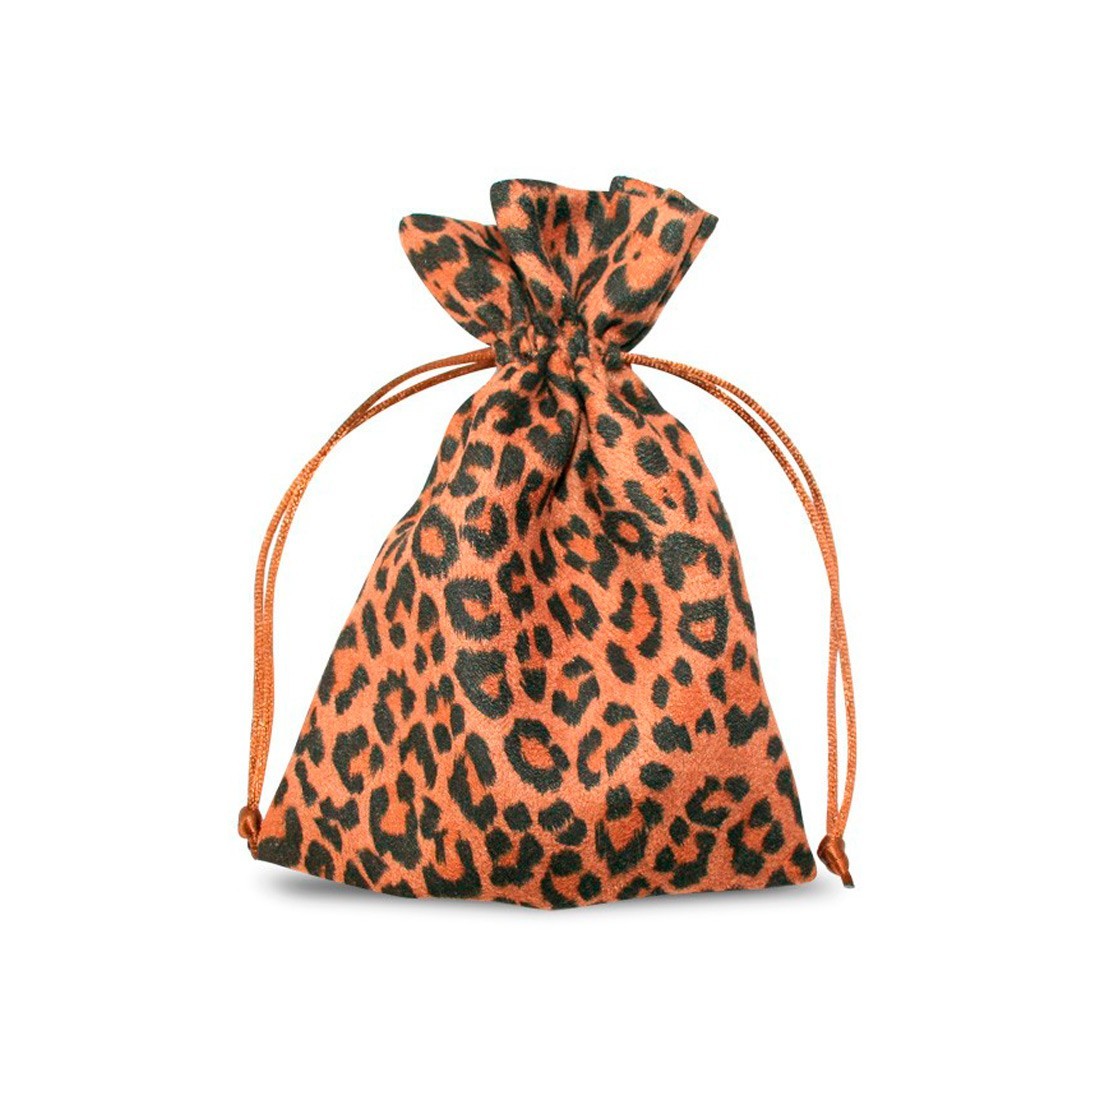 Suede Leopard print pouch